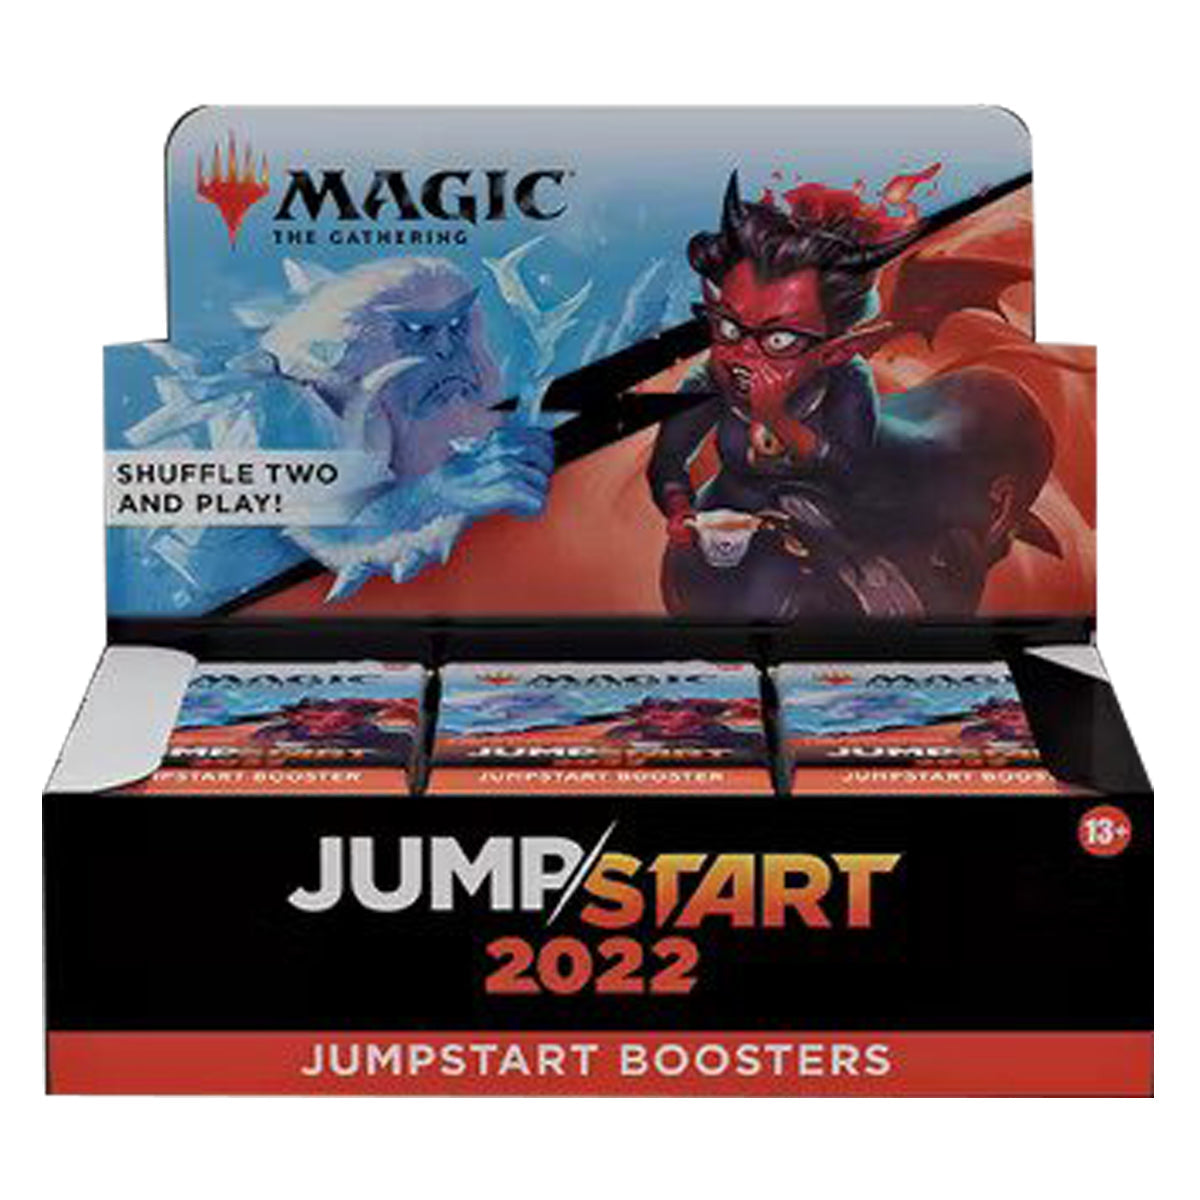 Magic Jumpstart 2022 Booster Box